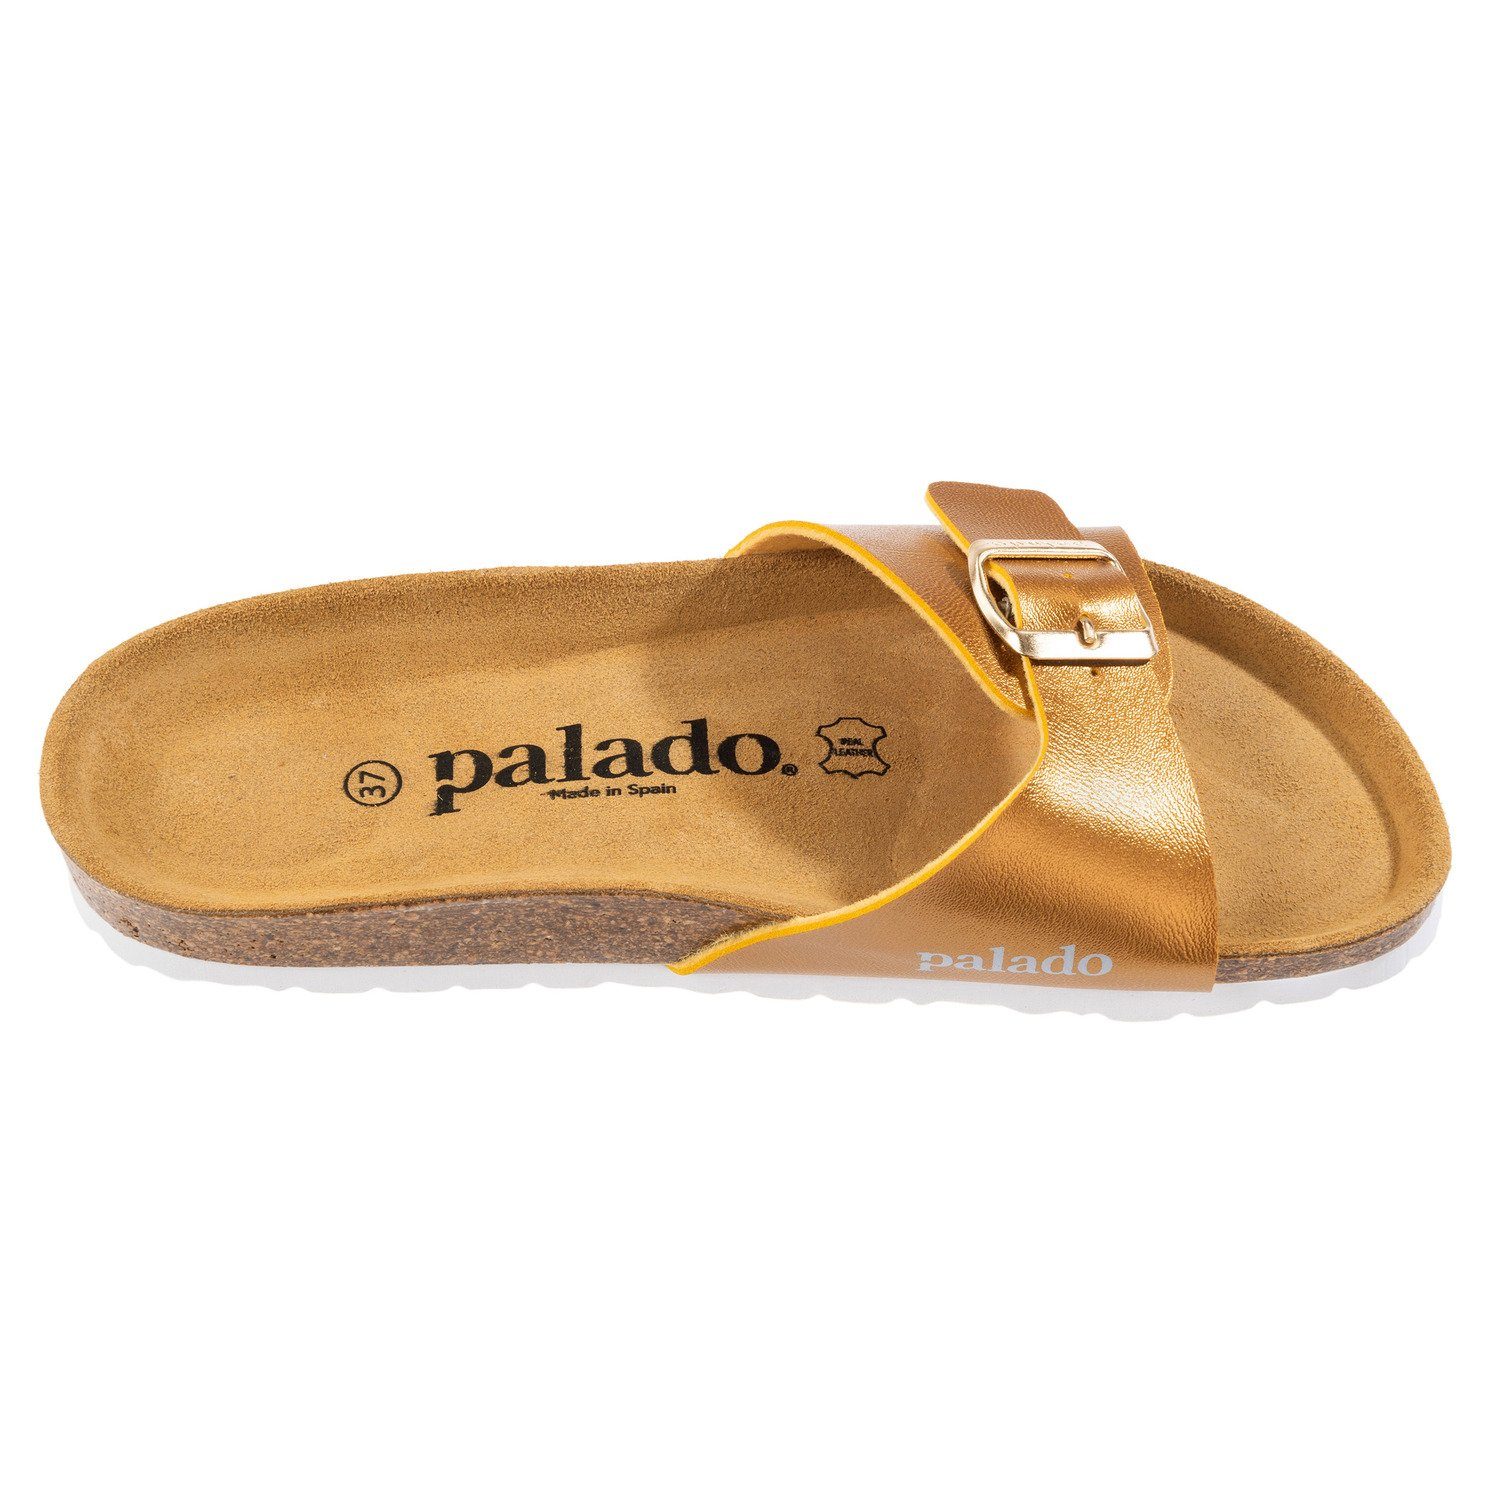 (16750131) Pantolette Palado Malta Gold Senf